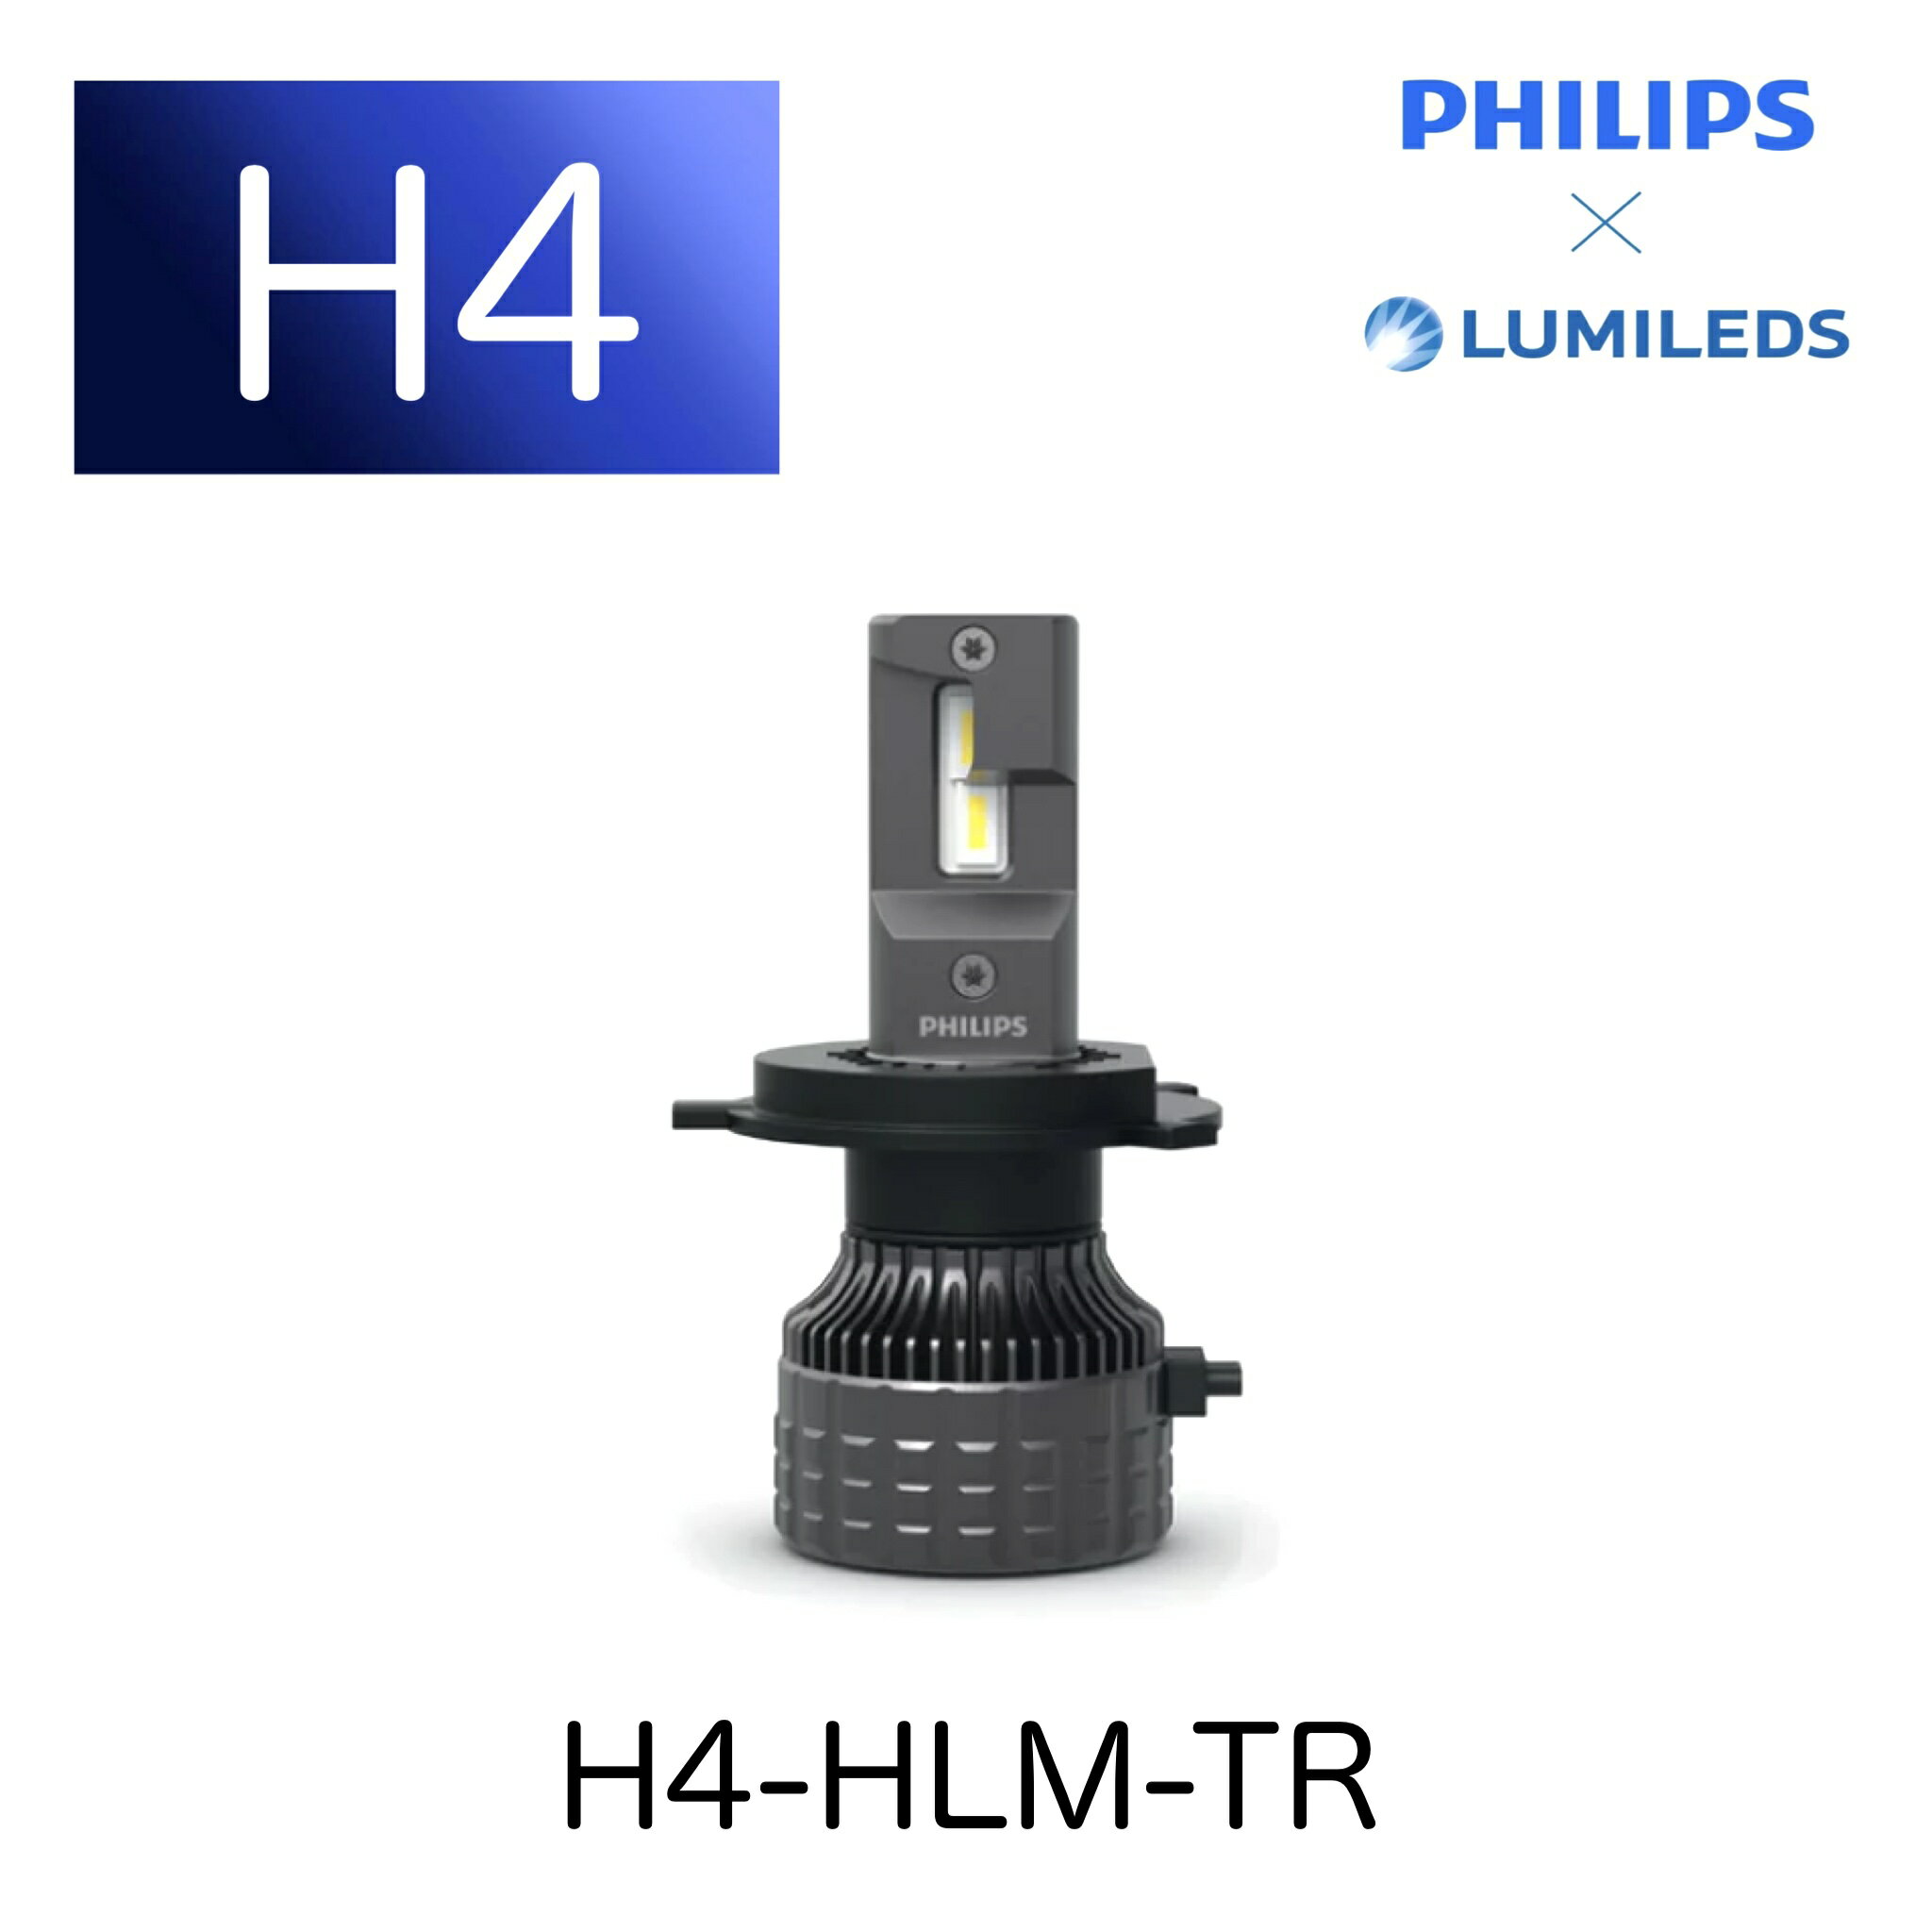 HB3/4-HLM-TR H11-HLM-TR H4-HLM-TR PHILIPS フィリップス LUMILEDS ハイルーメン LEDバルブセット HLM-TRシリーズ ヘッドライト フォグライト H4 H8 H11 H16 HB3 HB4 6500ケルビン 6500k 11342U3500X2 11005U3500X2 11362U3500X2